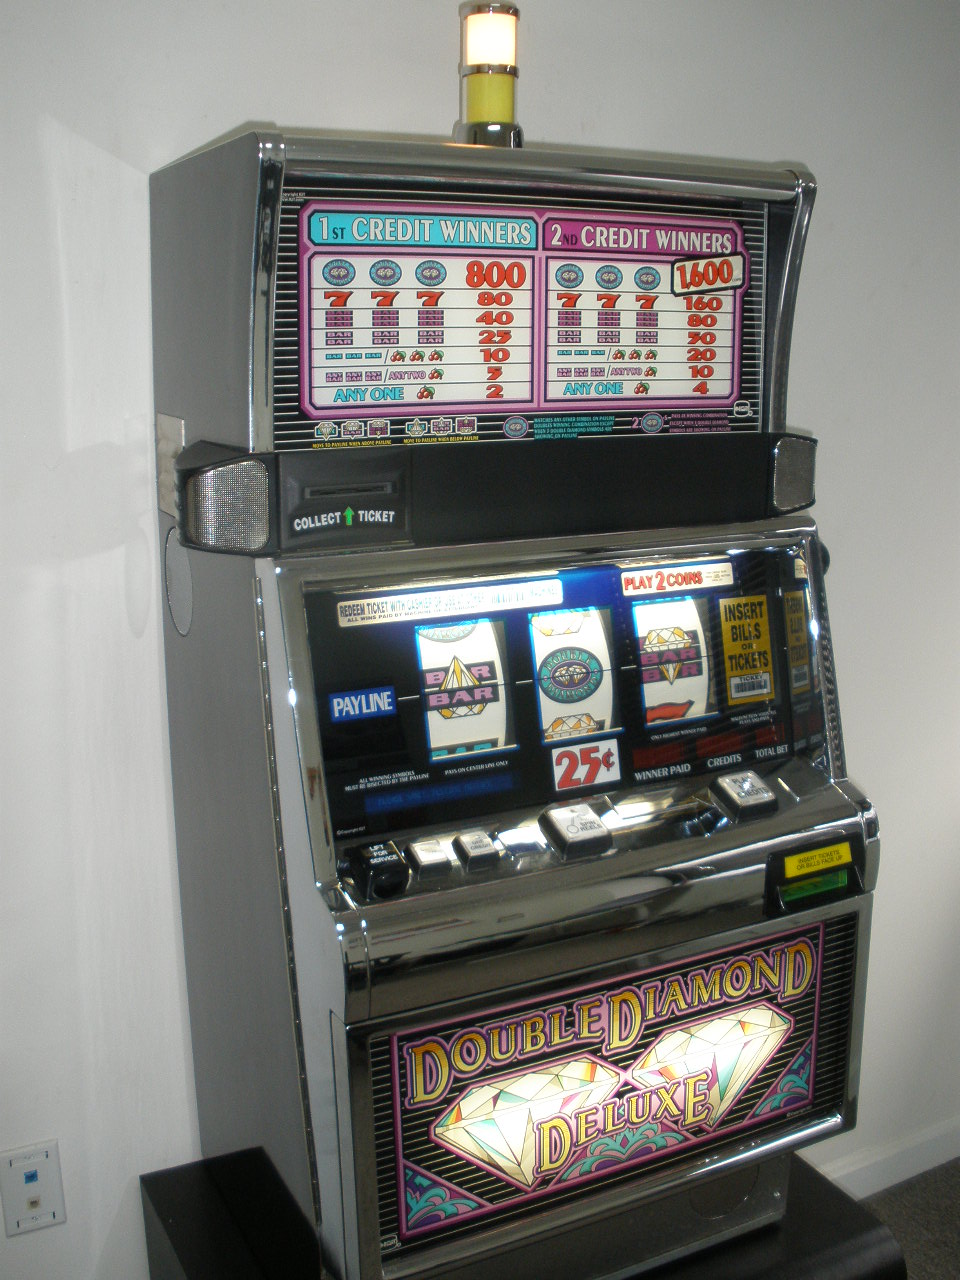 Double Diamond Slot Machines For Sale